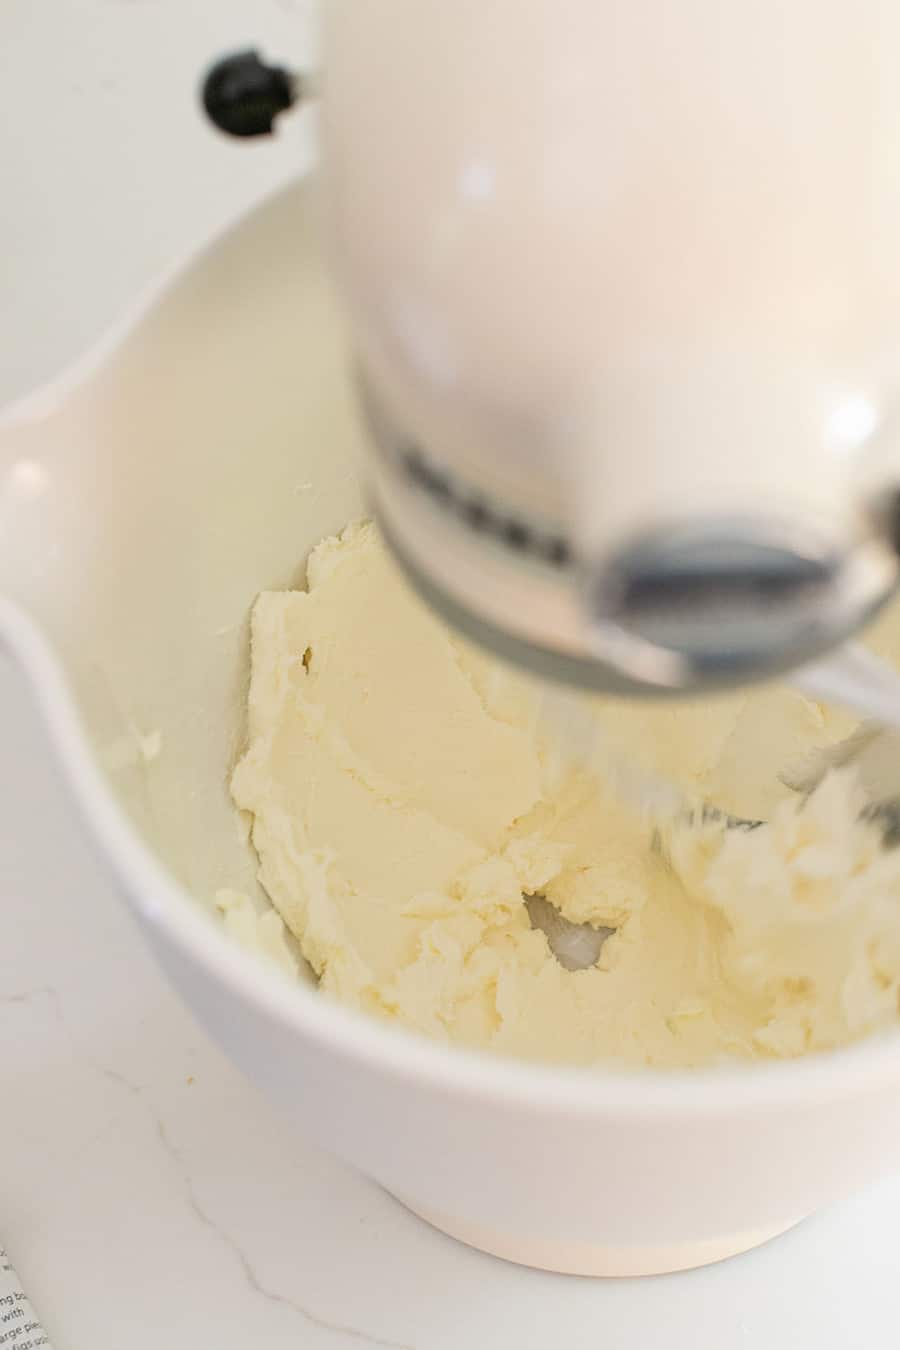 Mixing cream cheese in a mixer